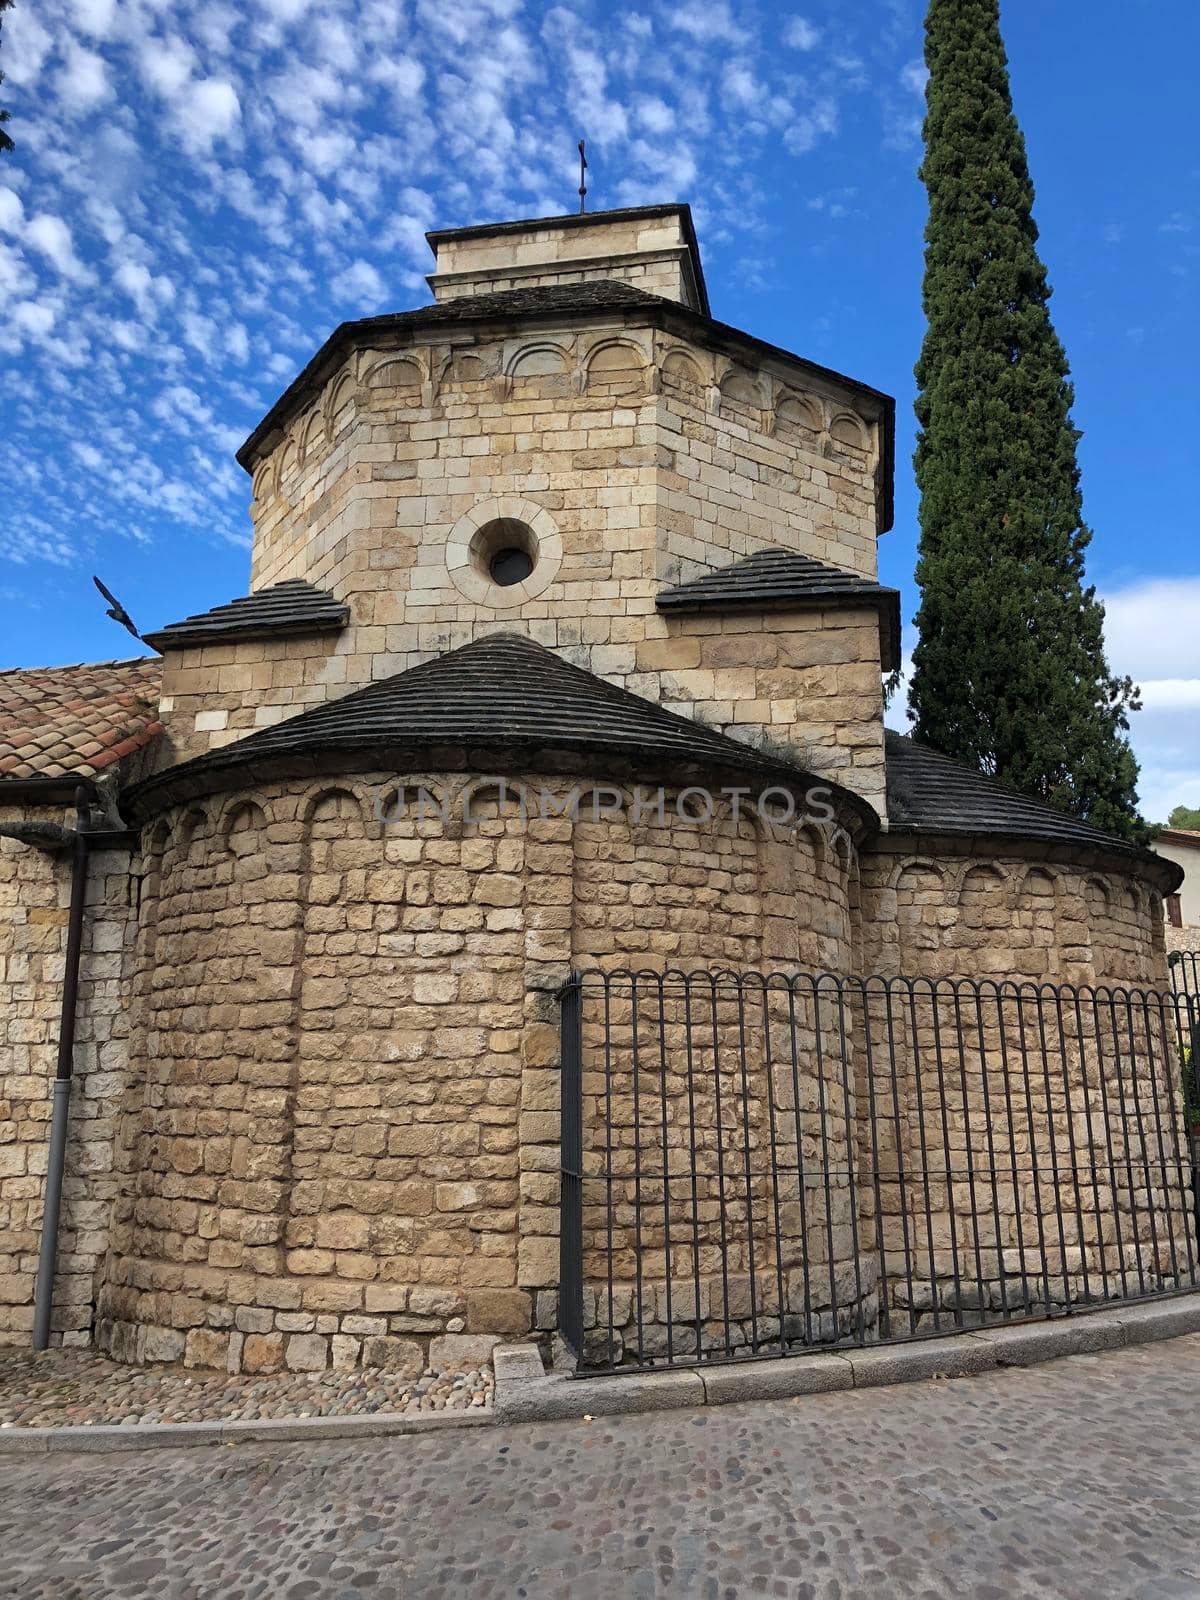 Capella de Sant Nicolau in Girona Spain